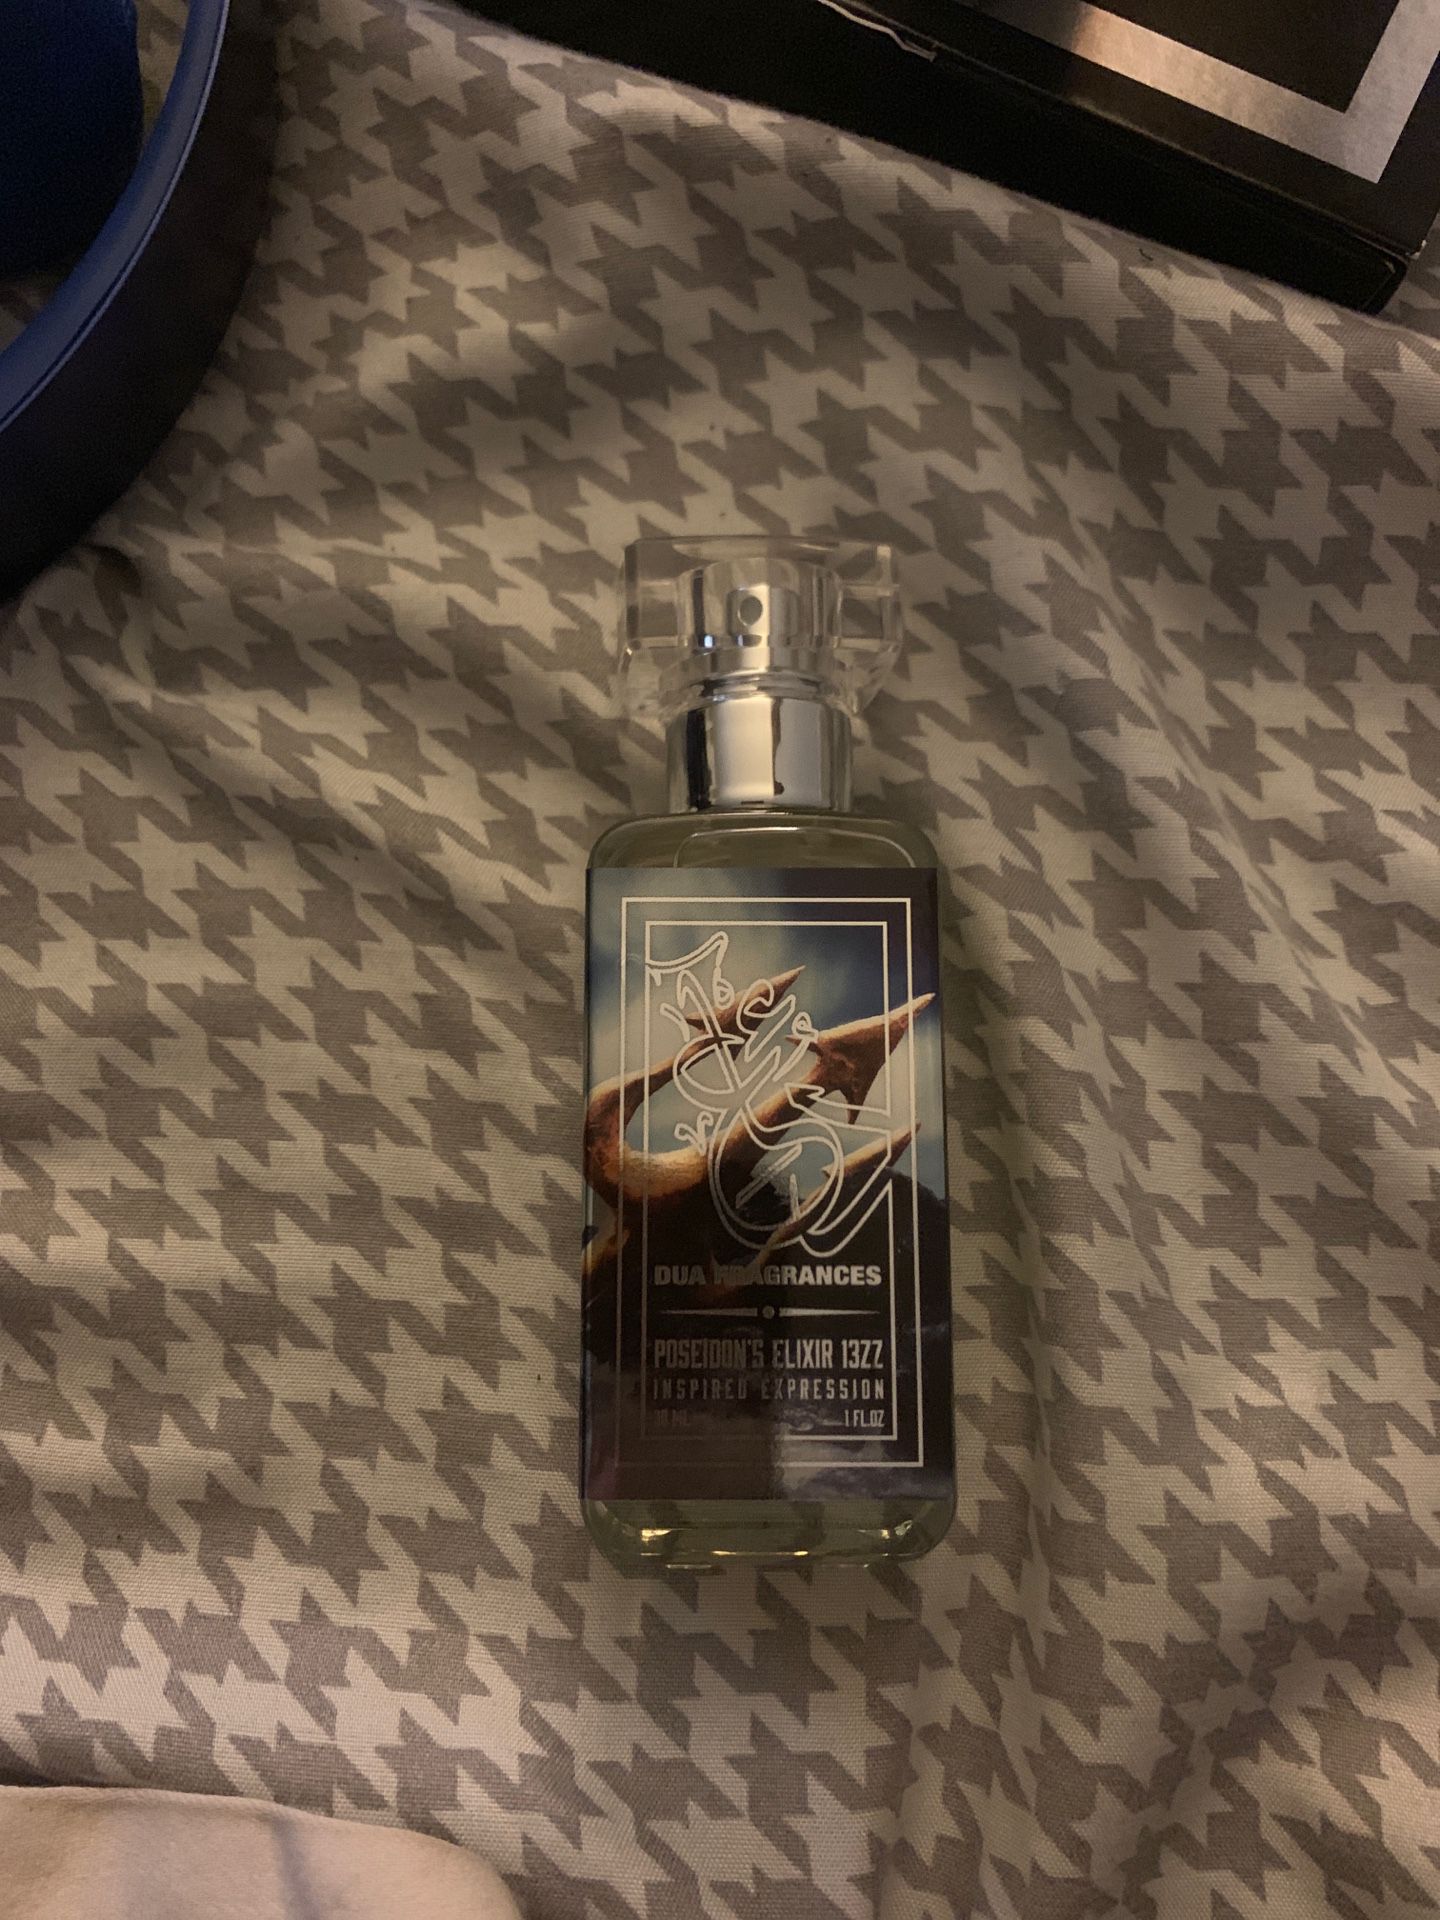 Dua Fragrance Poseidon’s Elixir 13ZZ